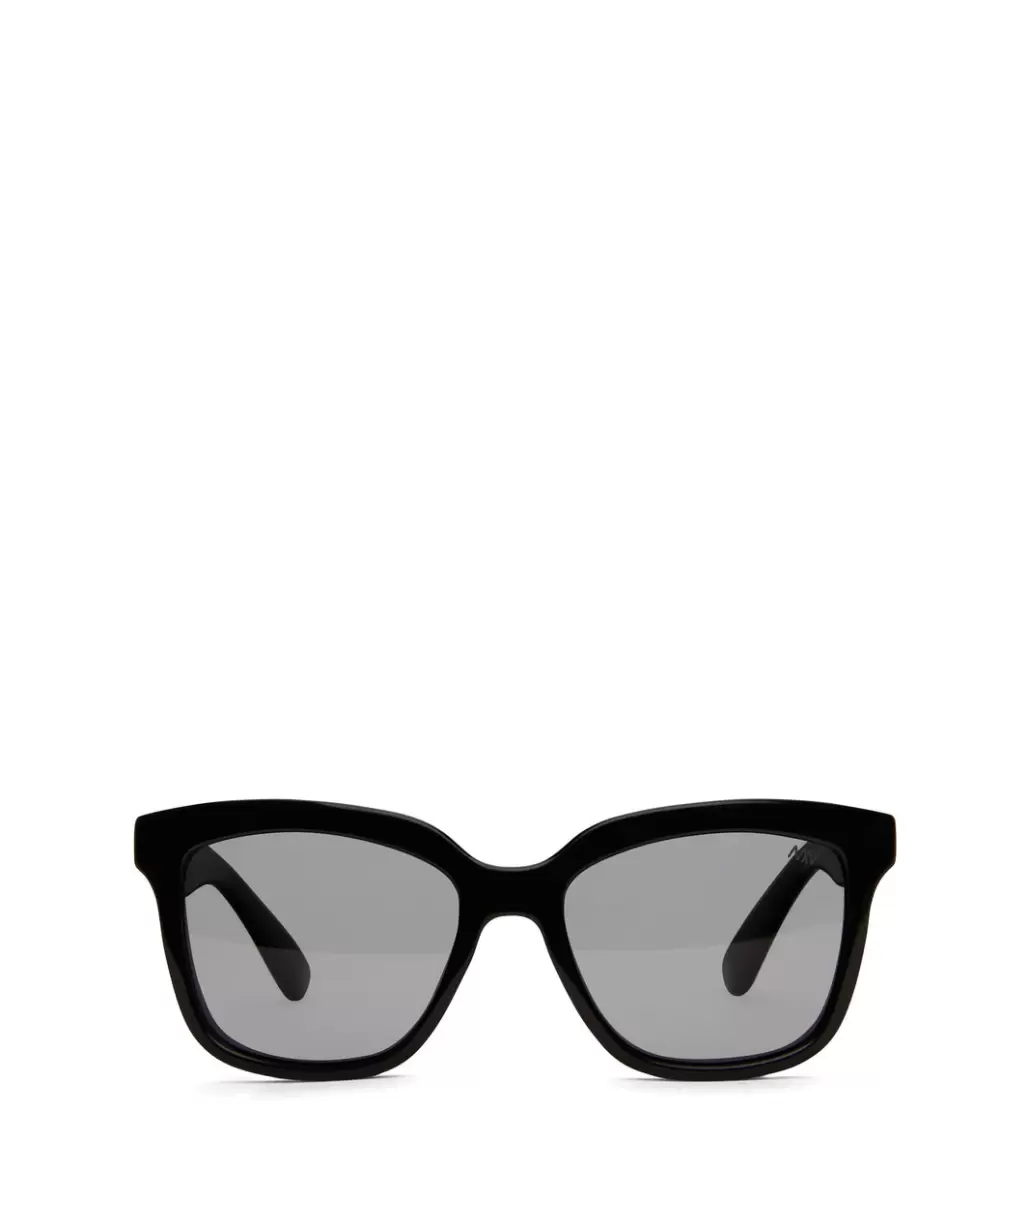 Matt & Nat Blkblk Sunglasses Women Value Vivie Wayfarer Sunglasses